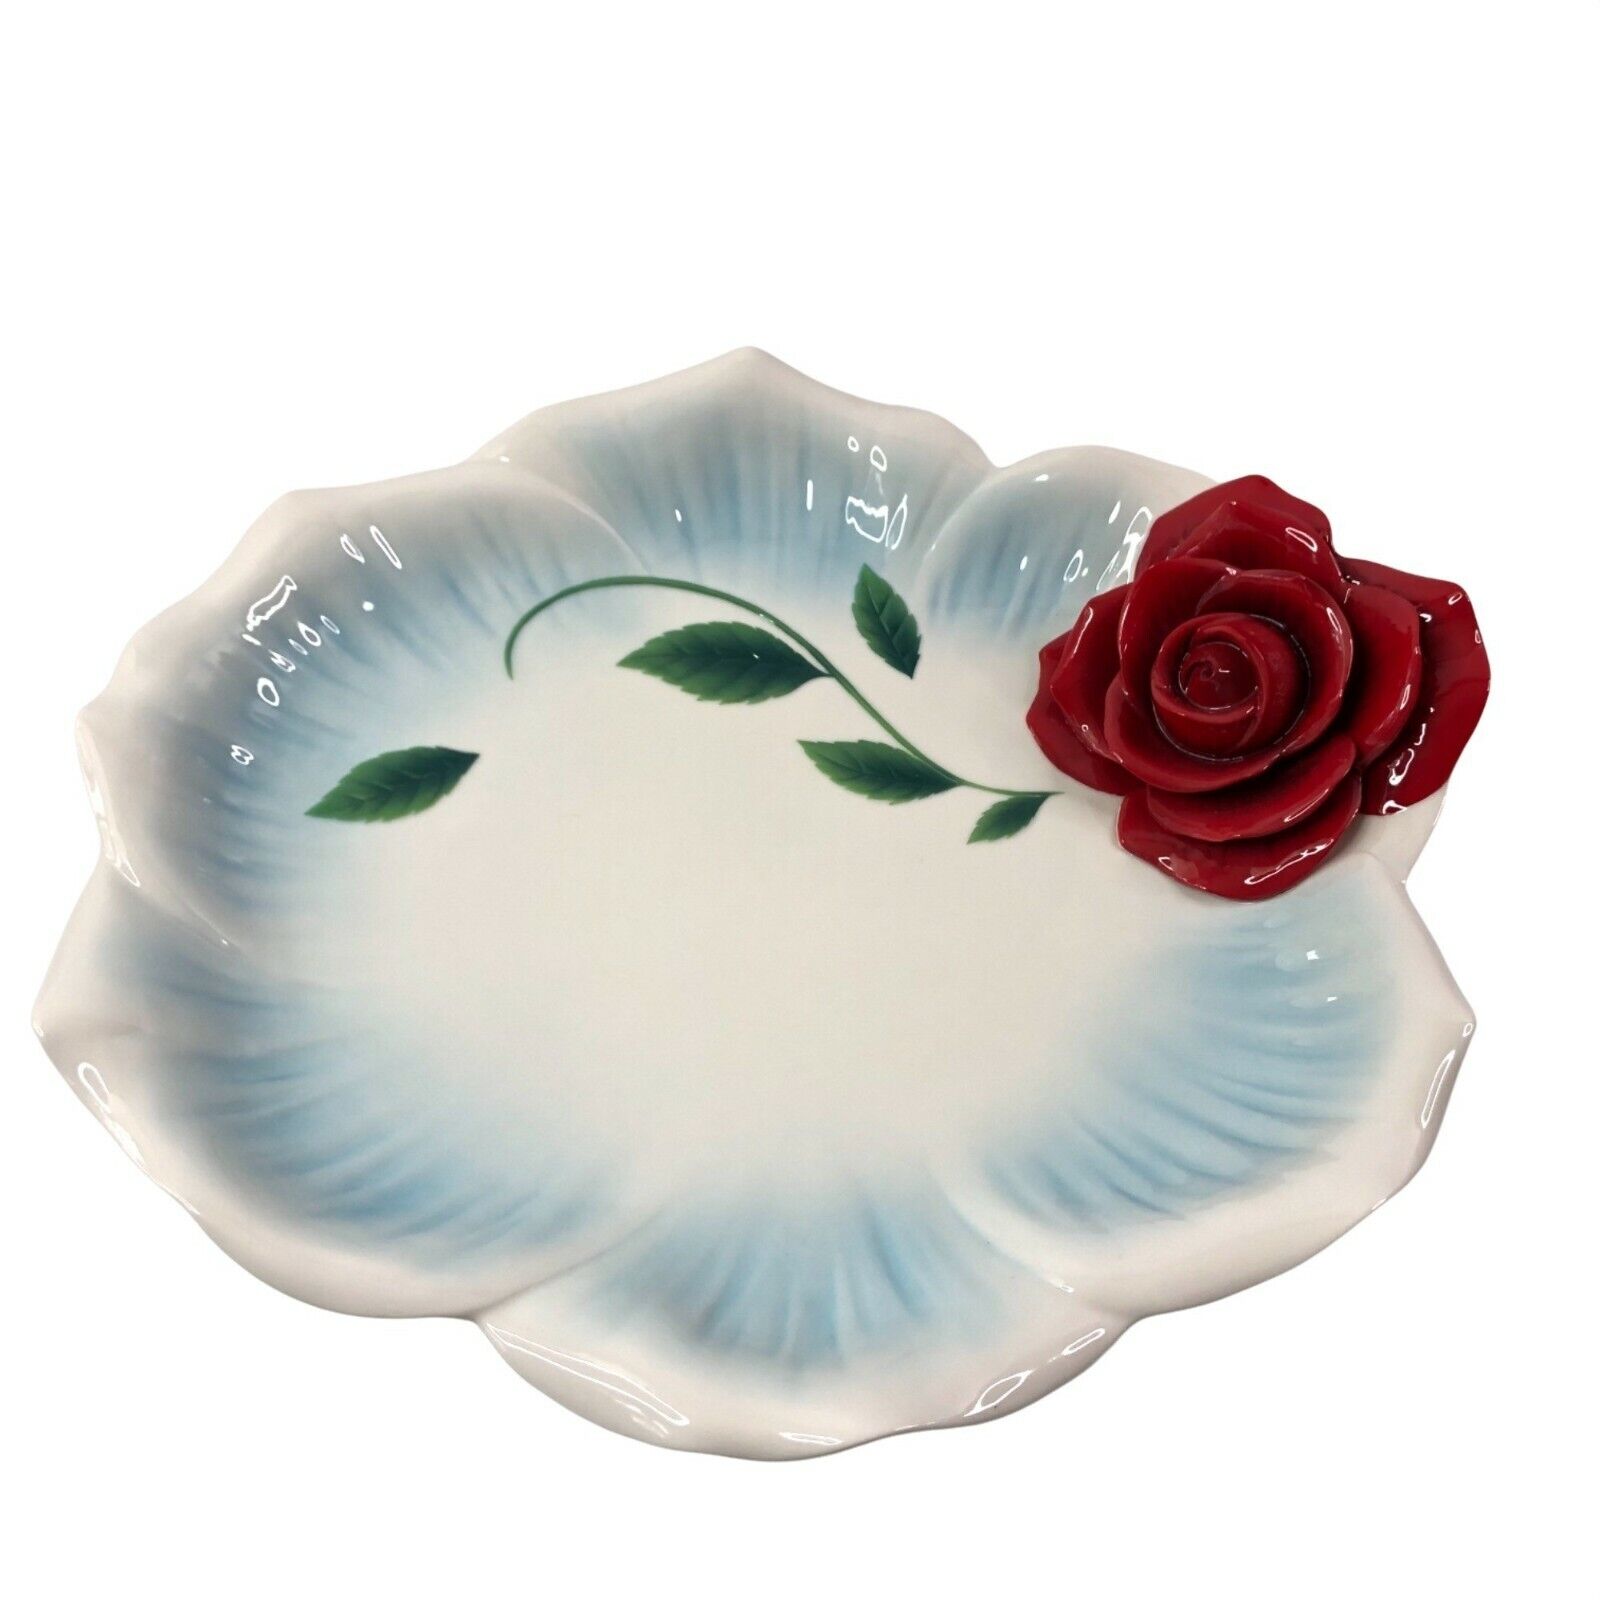 Franz Romance of the Rose Large Tray Platter Sculptured Porcelain Oversized